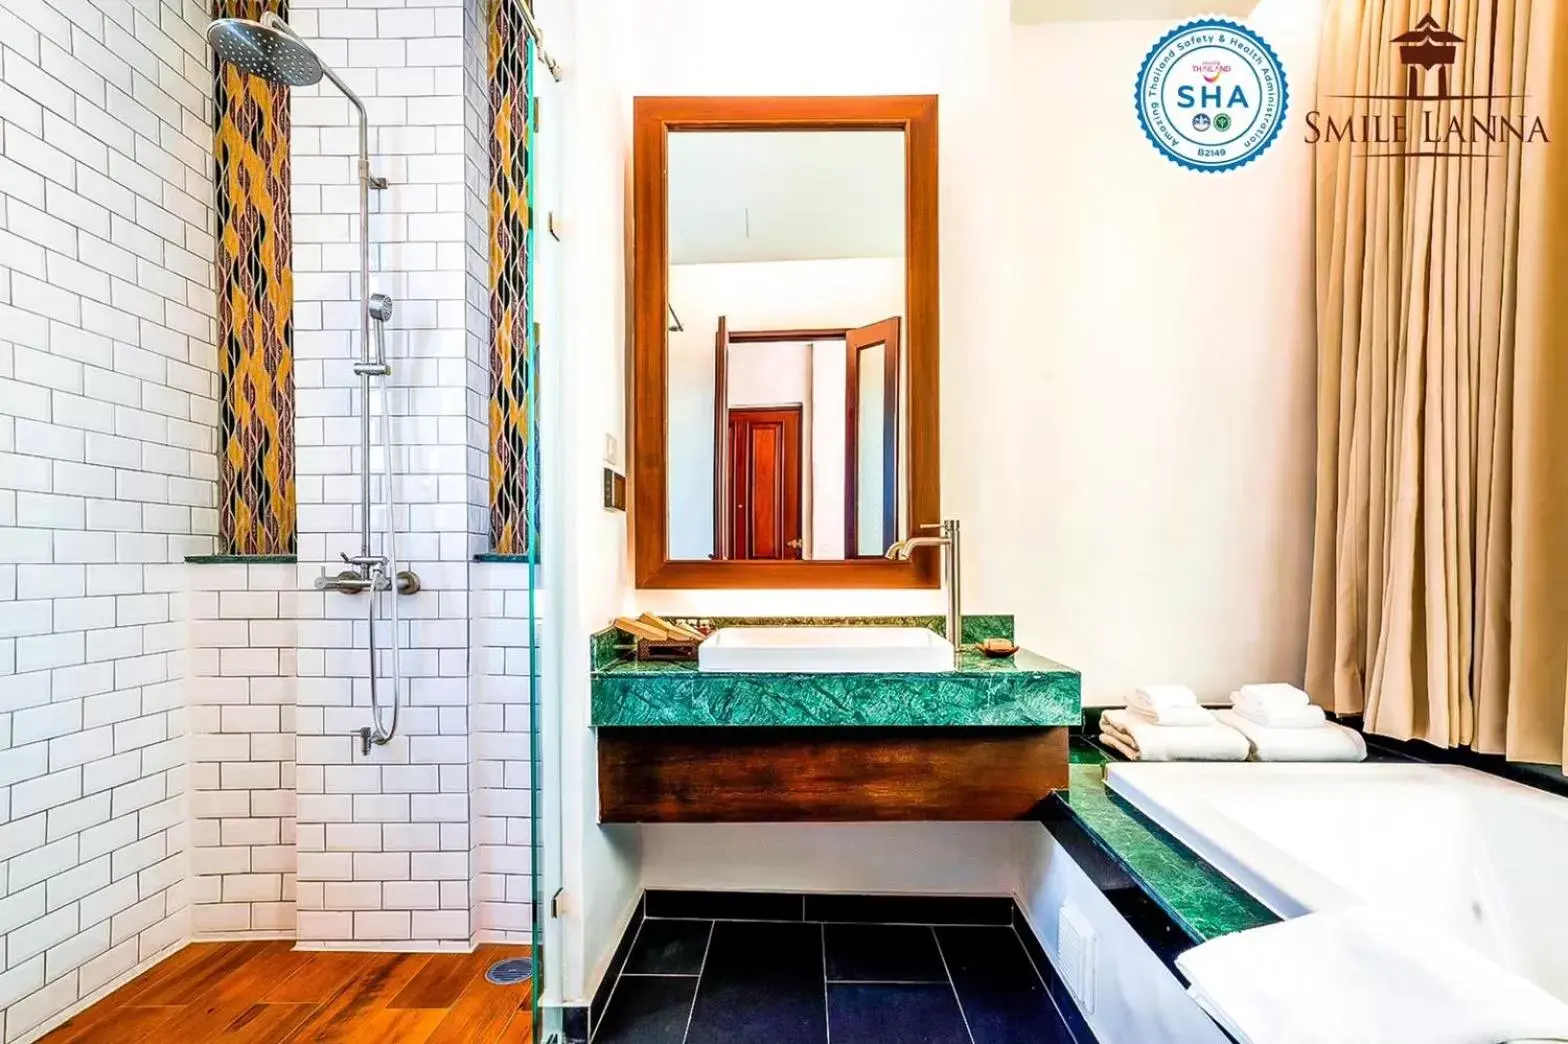 Bathroom in Smile Lanna Hotel